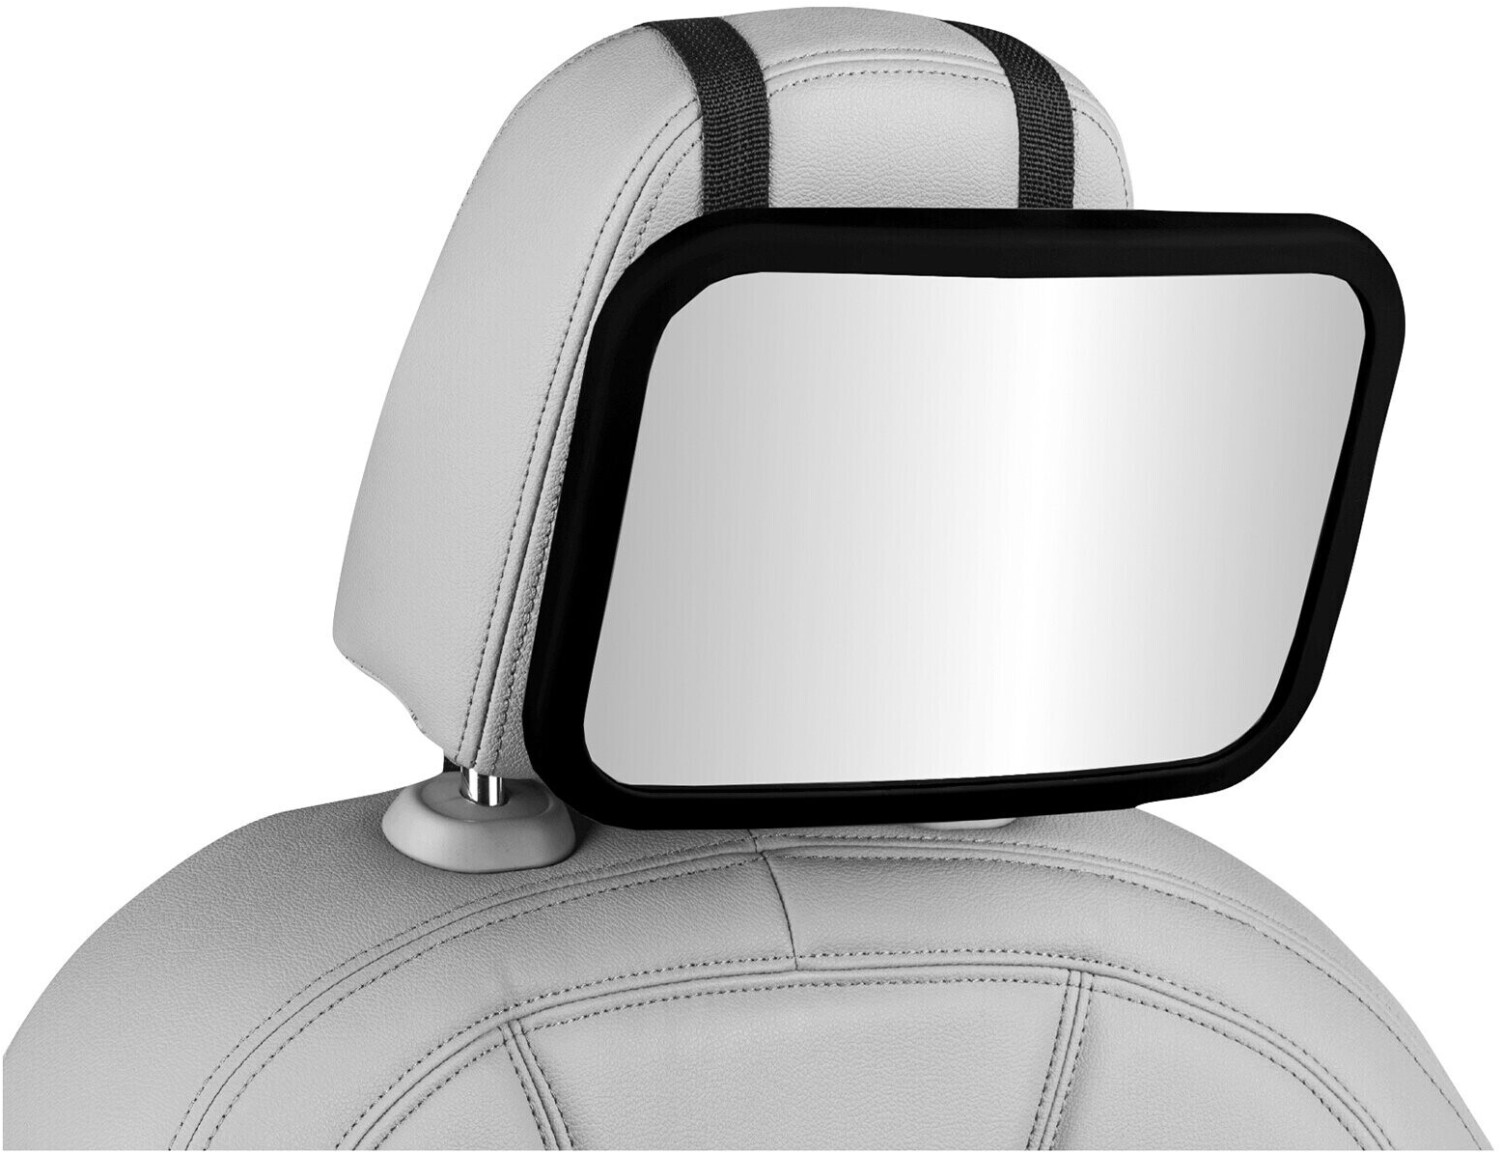 Auto Rücksitzspiegel Babys Rückspiegel Baby Autospiegel